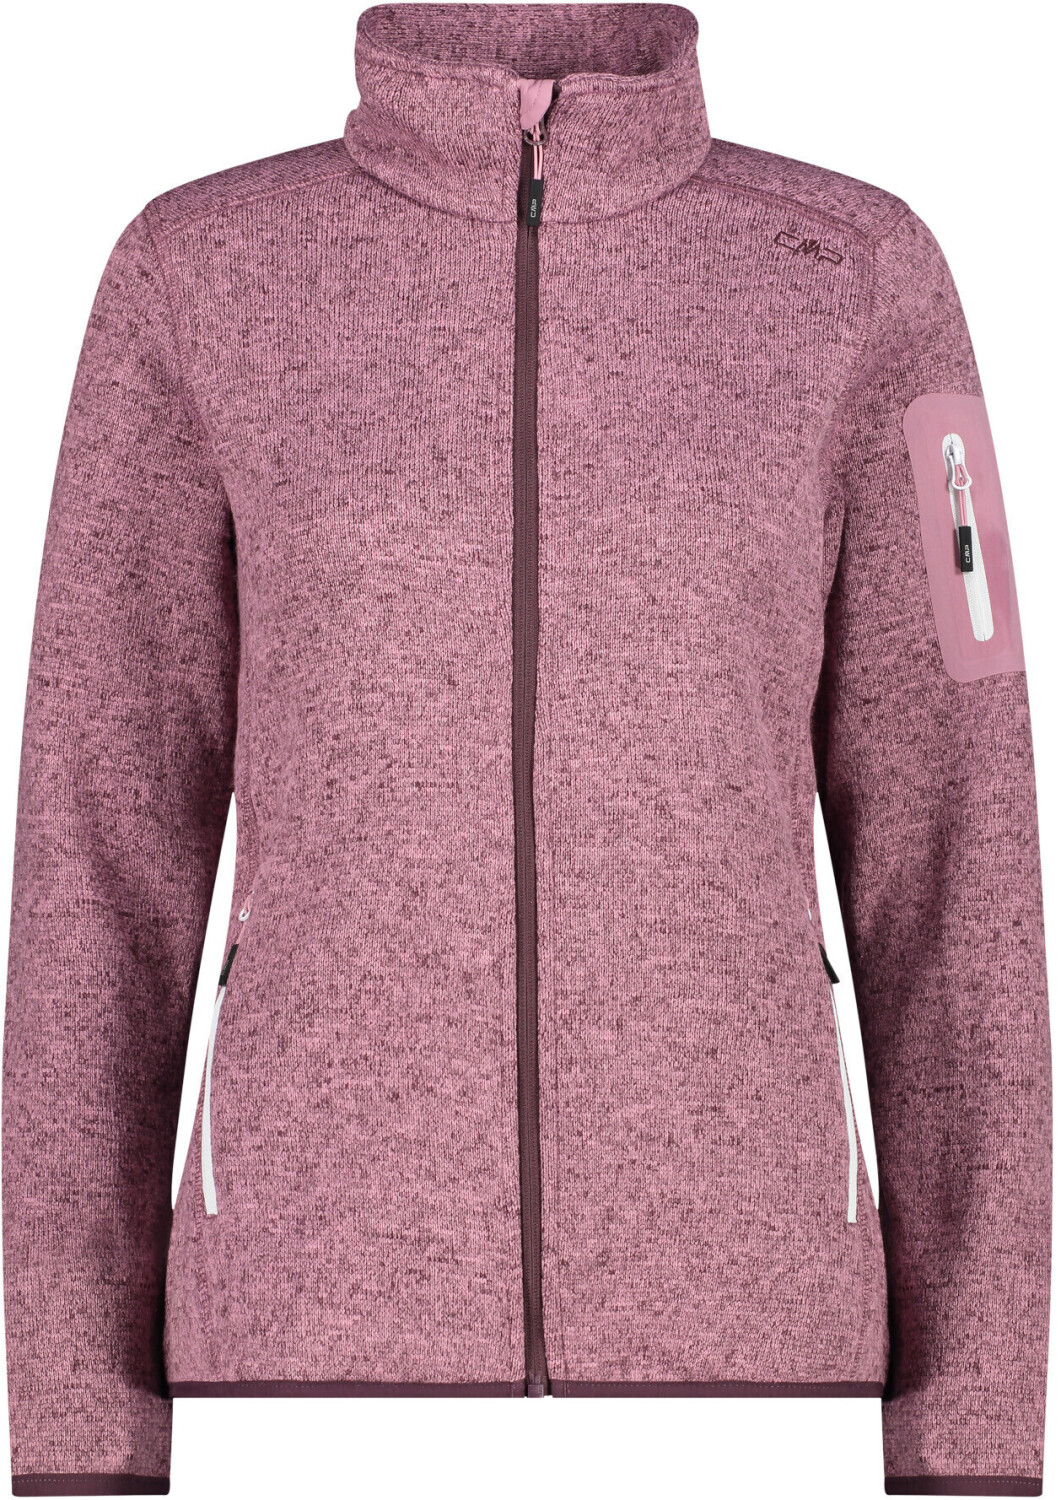 CMP Fleece Jacket Knit-Tech Melange ab fard-plum bei 34,95 (3H14746) € | Preisvergleich